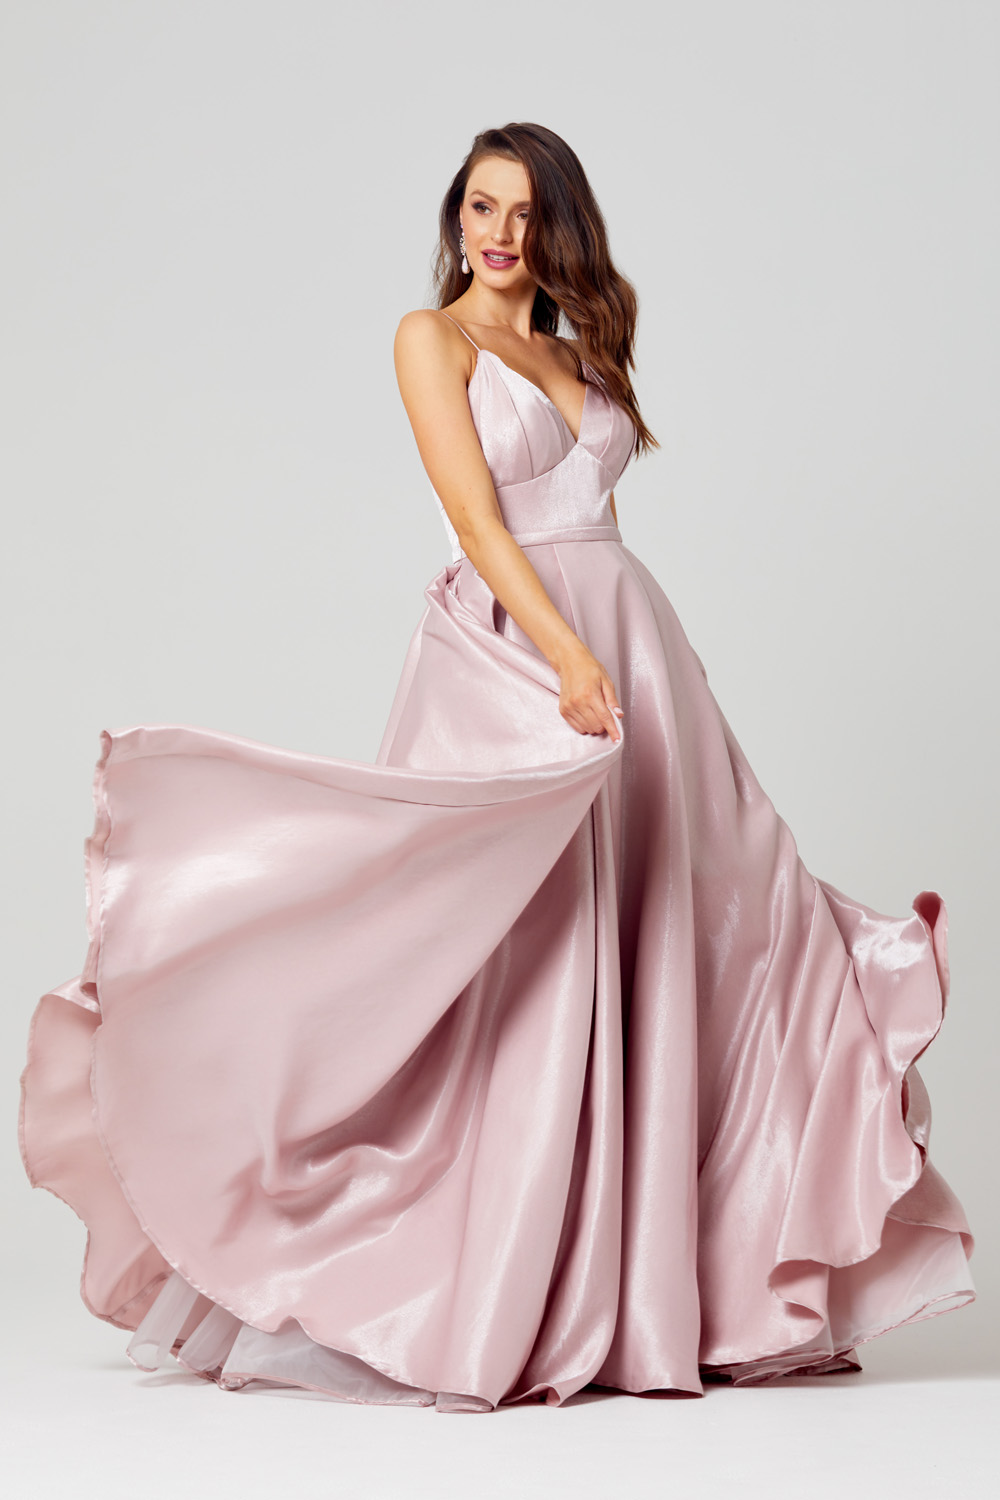 LEIA PO834 Papillon 2020 Evening dress by Tania Olsen Designs